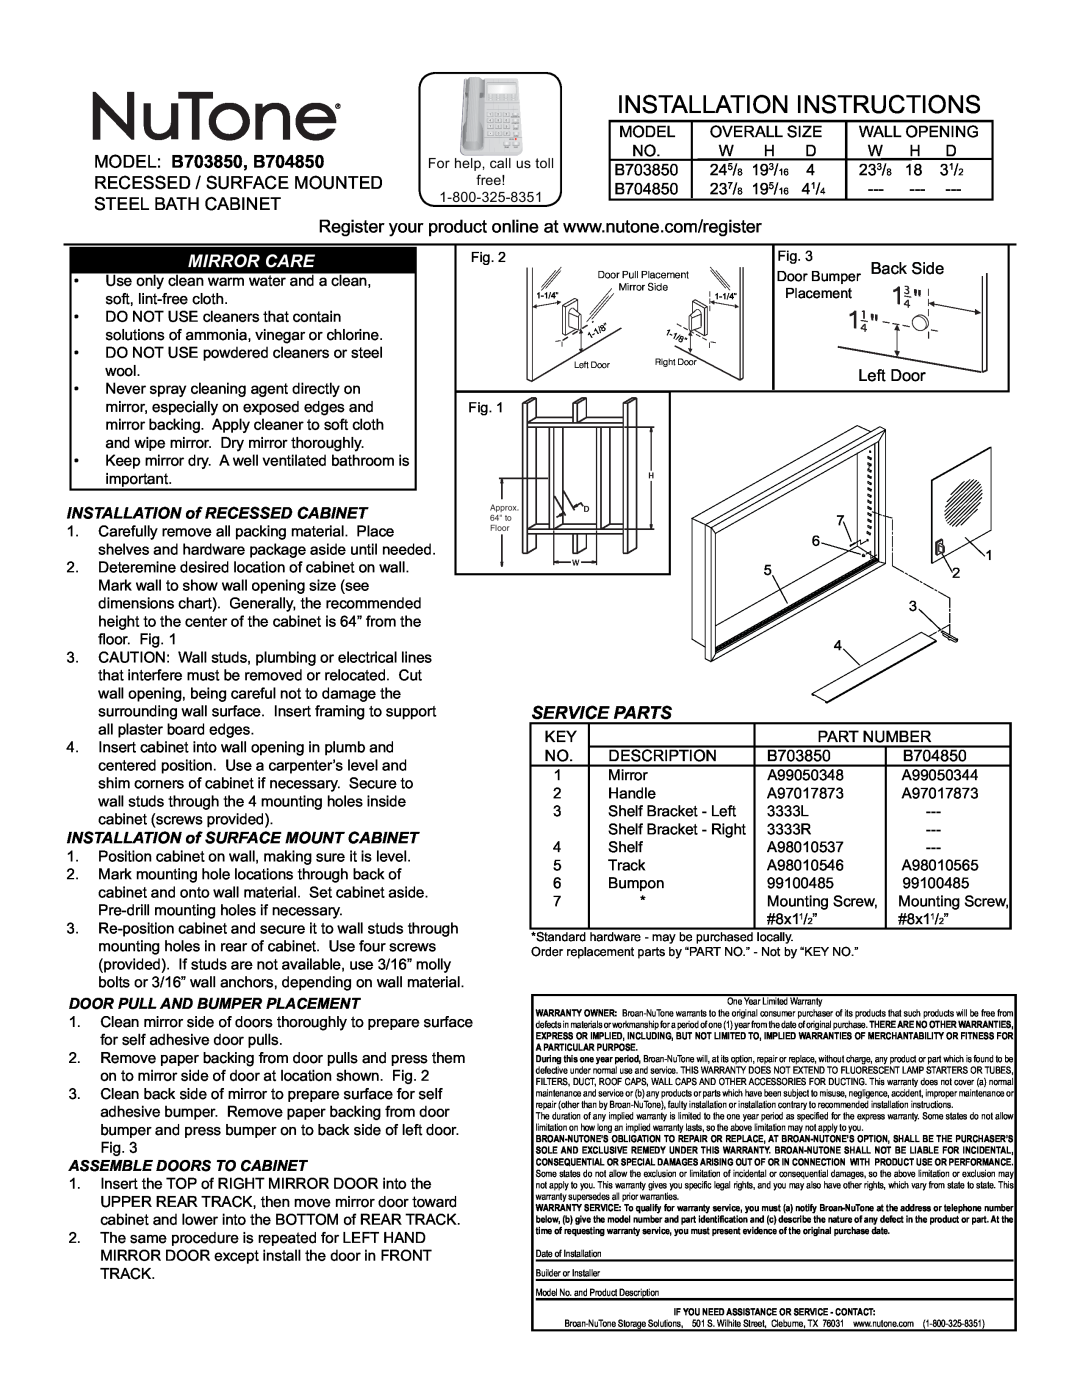 NuTone B703850 installation instructions Installation Instructions, Service Parts, INSTALLATION of RECESSED CABINET 